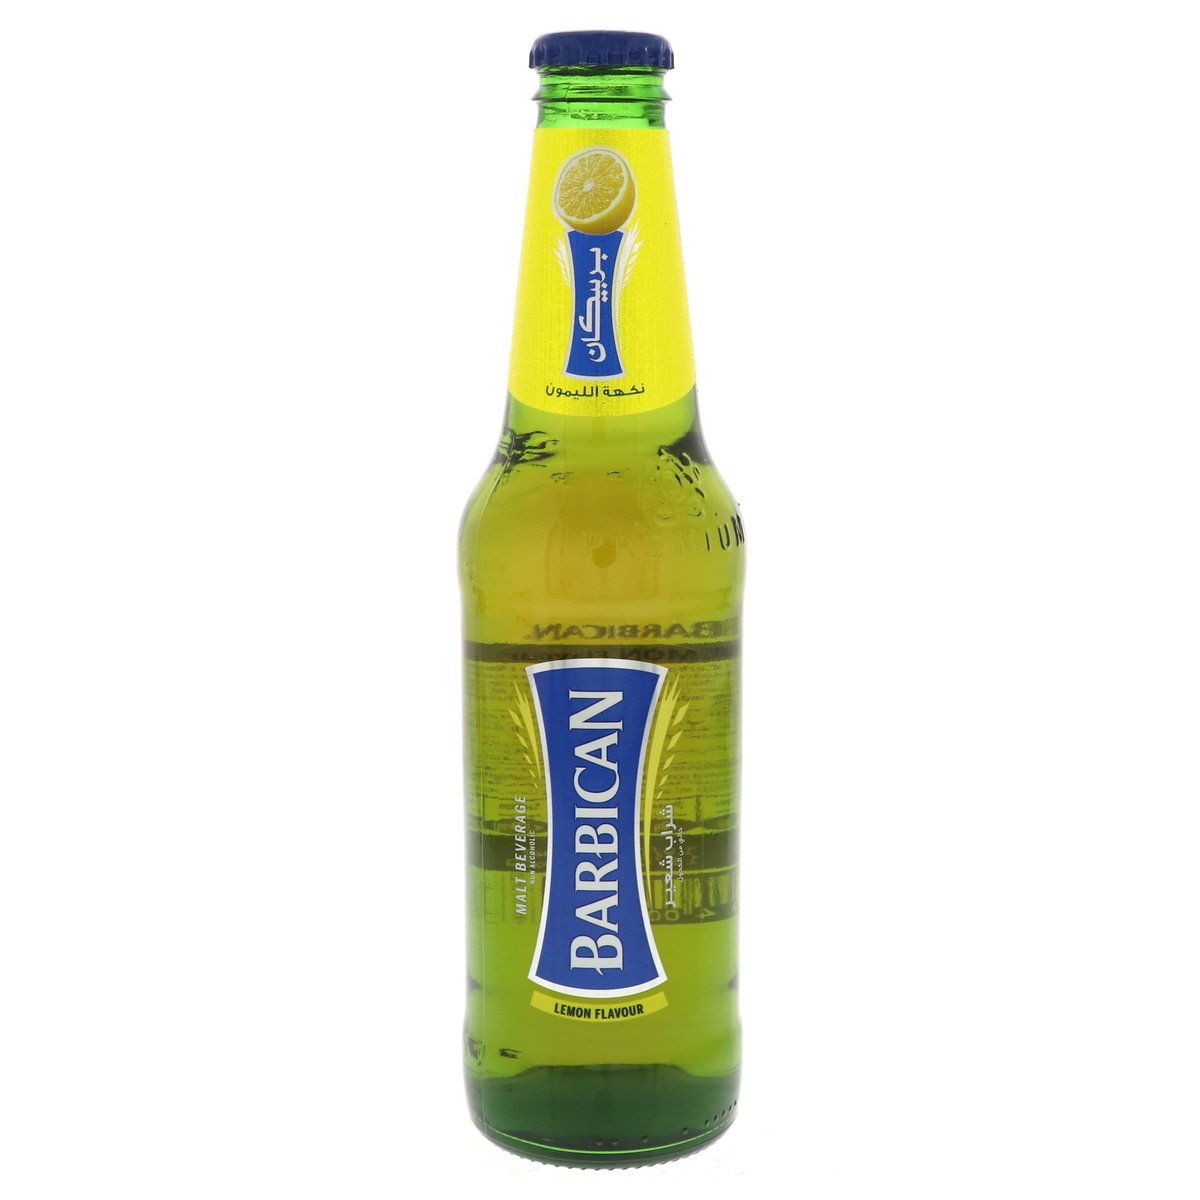 Barbican Lemon Non-Alcoholic Malt Beverage 6 x 330 ml